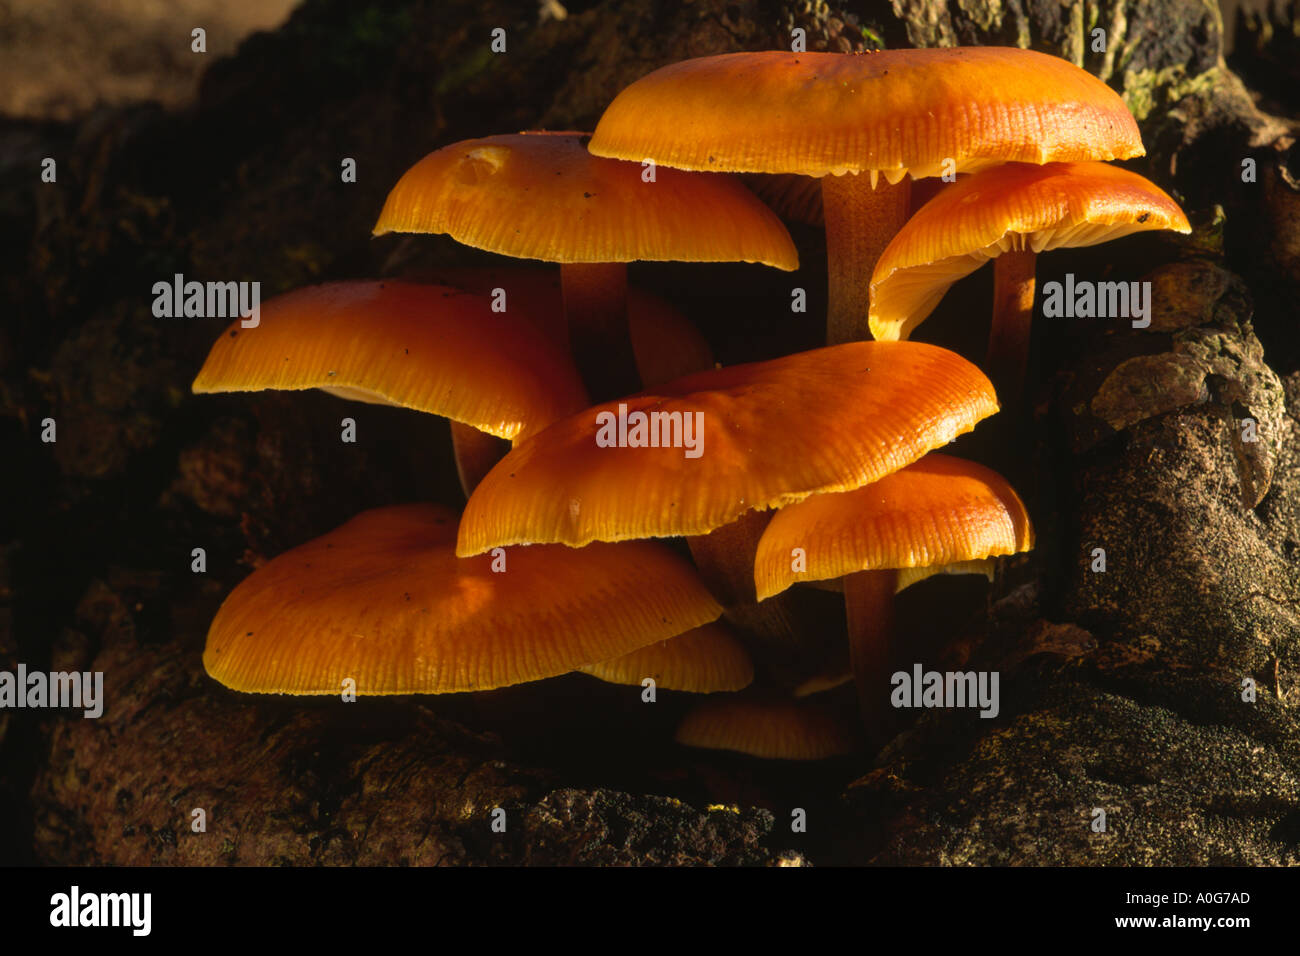 Brick Cap Fungus Hypoloma sublateritium growing on a rotting fallen tree trunk Stock Photo